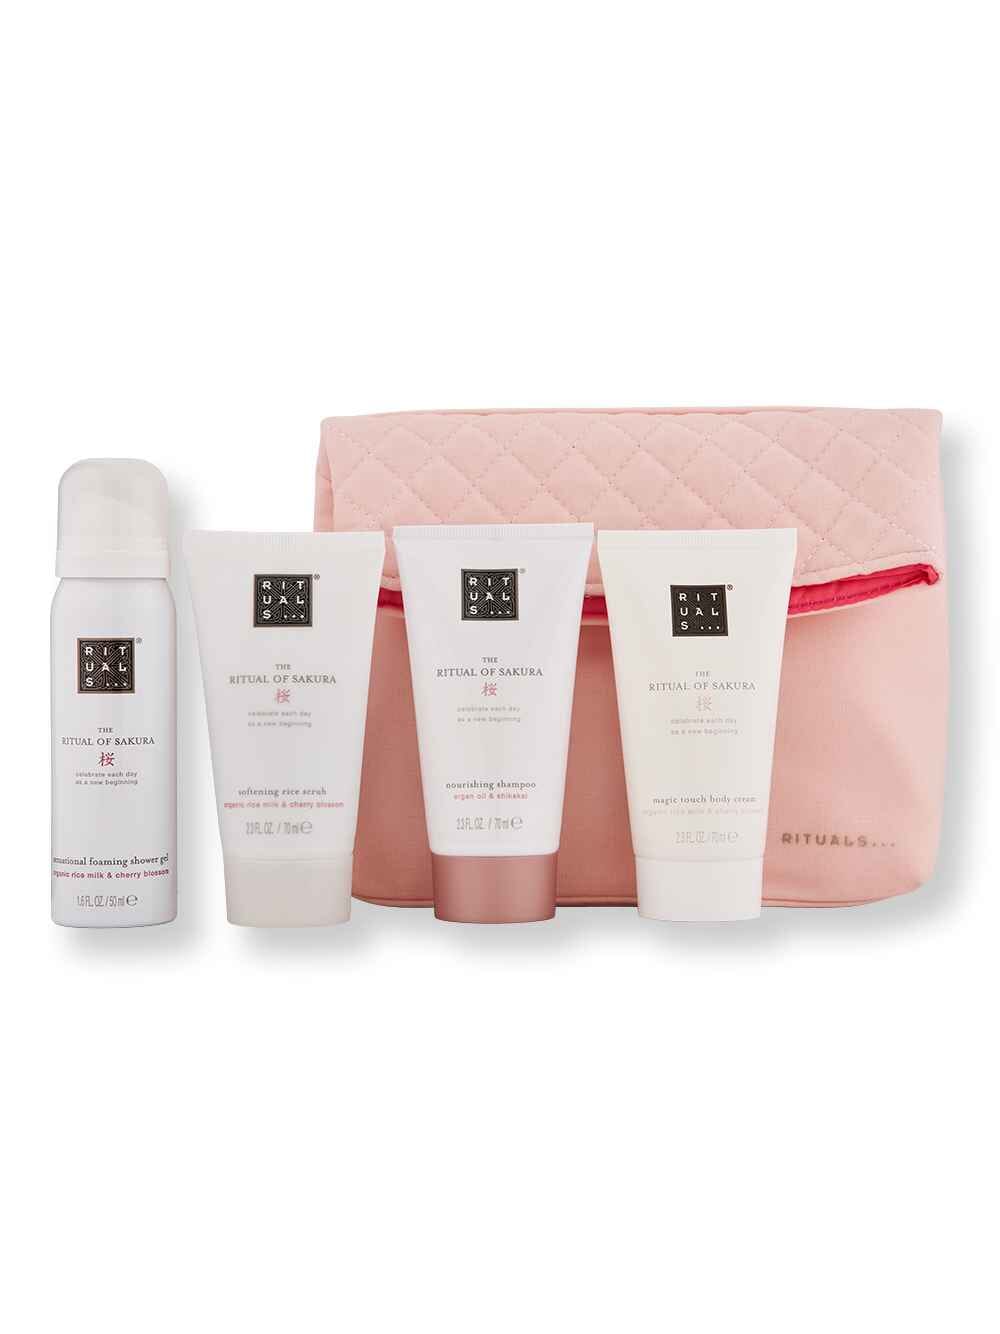 Rituals Rituals The Ritual of Sakura Travel Exclusives Skin Care Gift Sets 